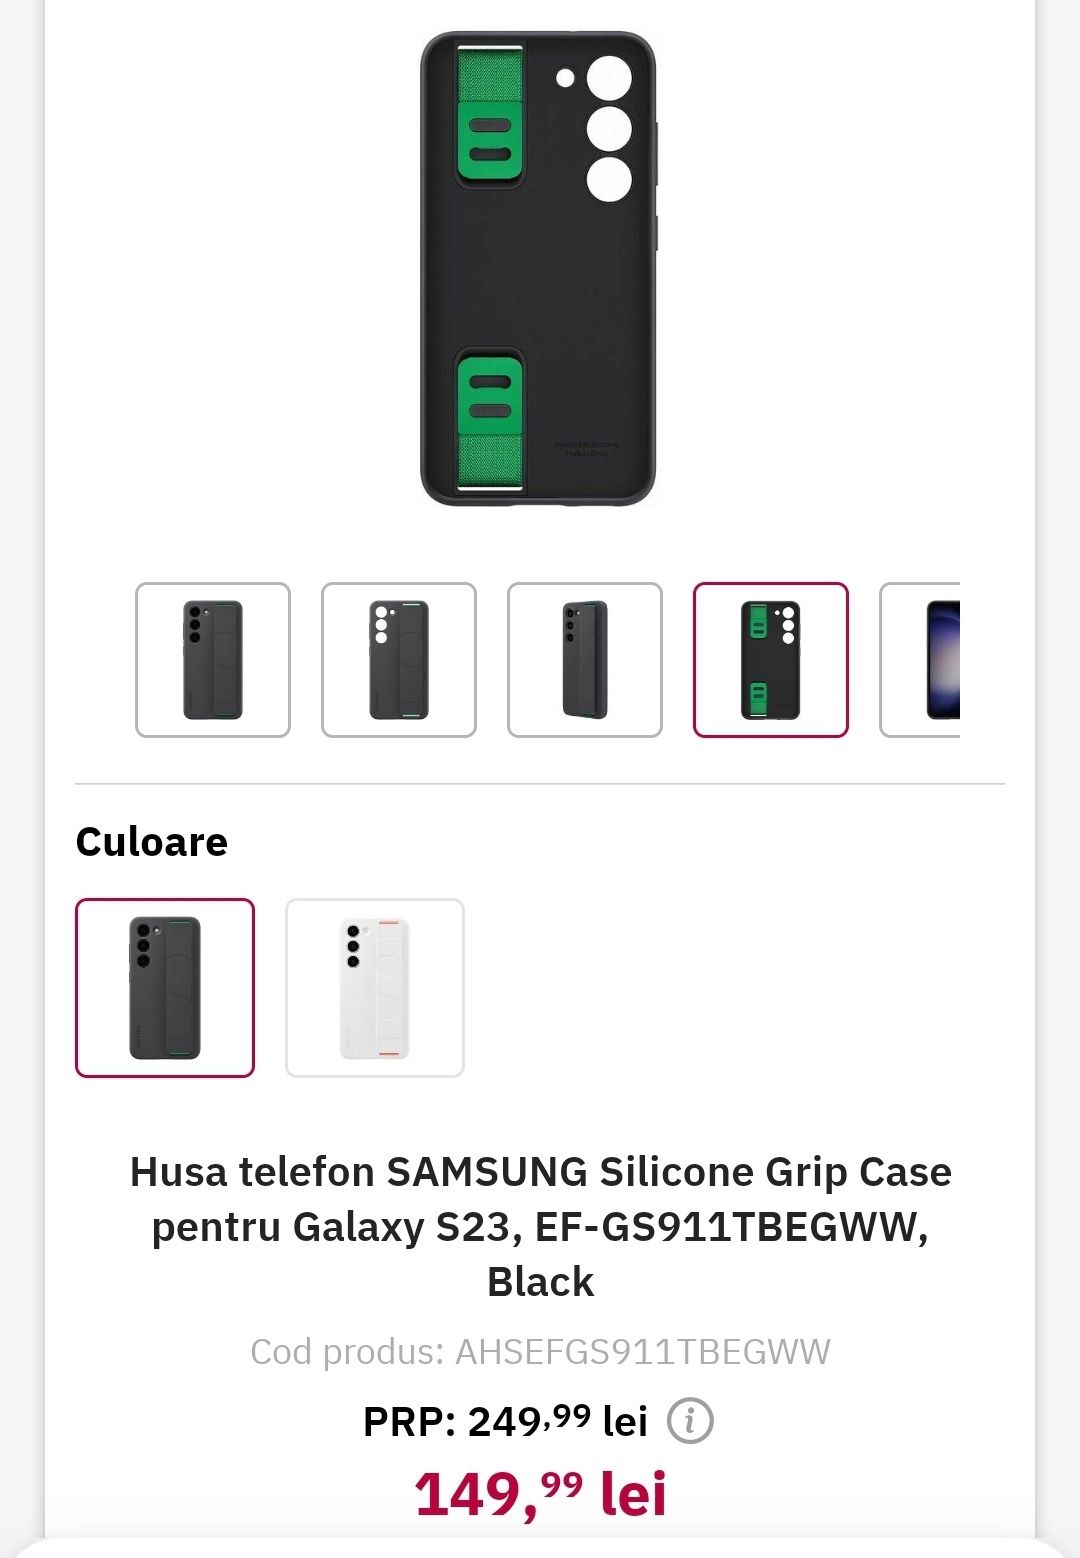 Husa telefon SAMSUNG Silicone Grip Case pentru Galaxy S23